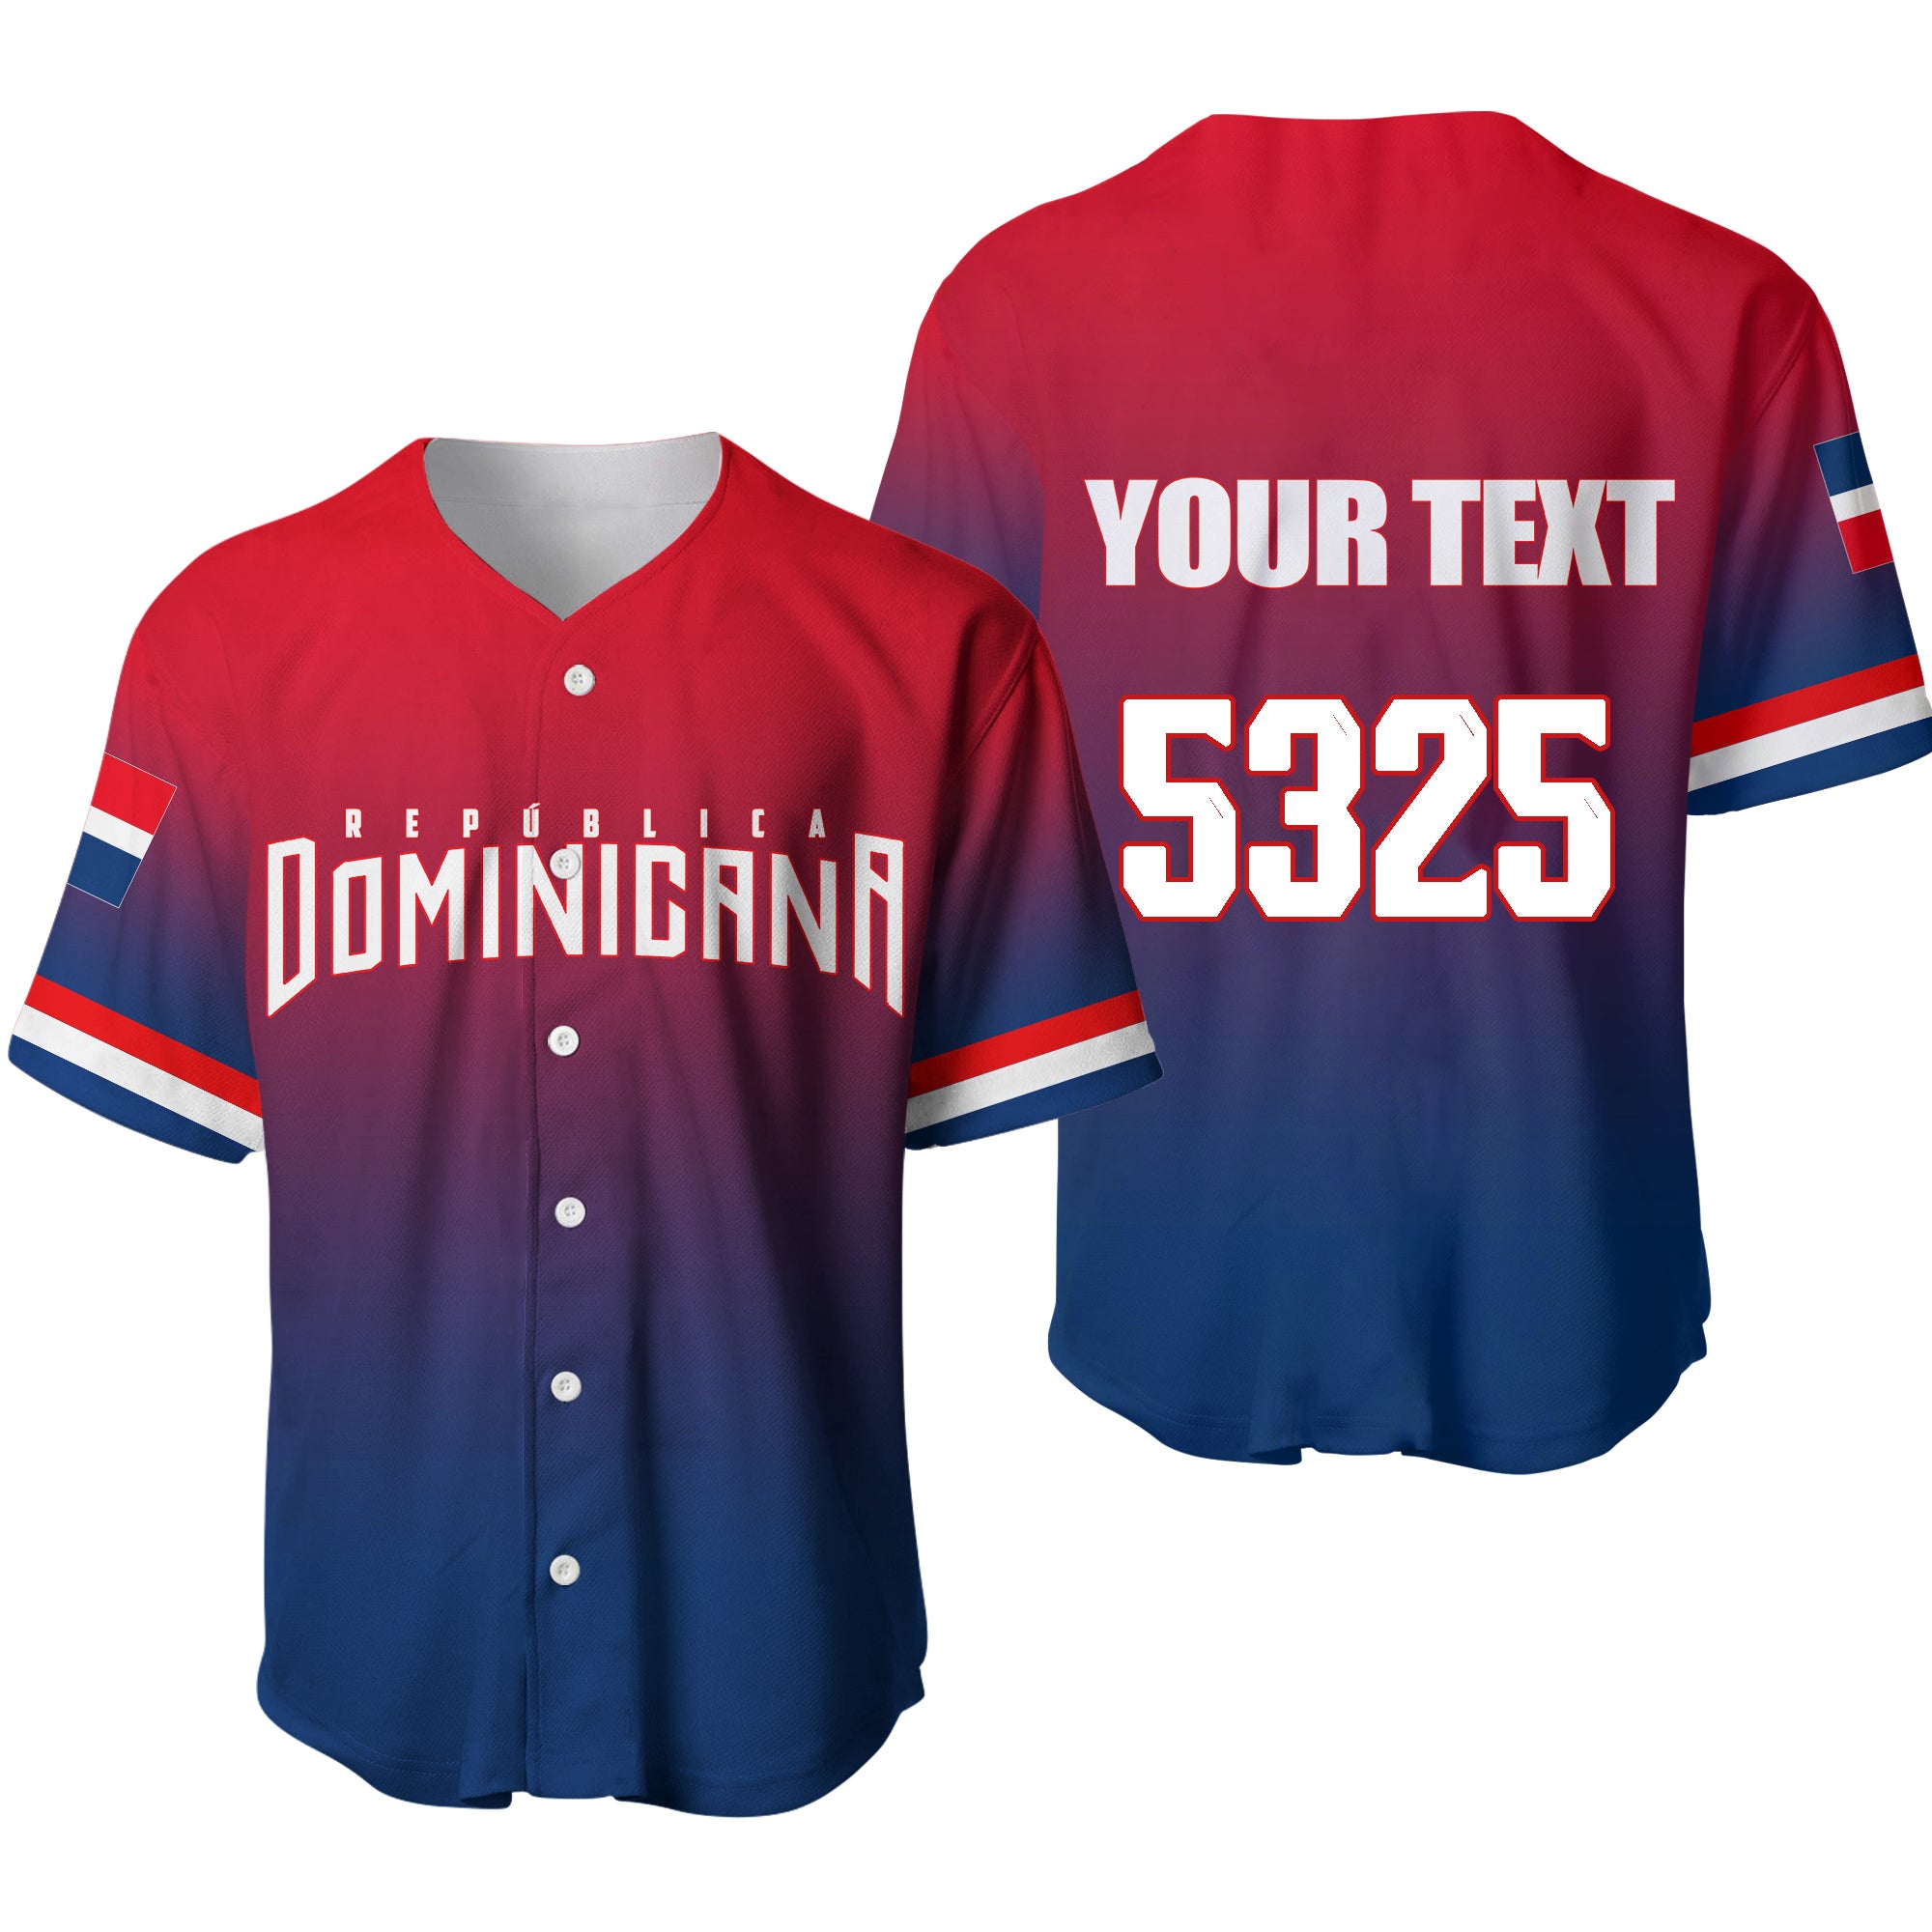 Personalised Baseball 2023 Dominicana 5325 Baseball Jersey LT6